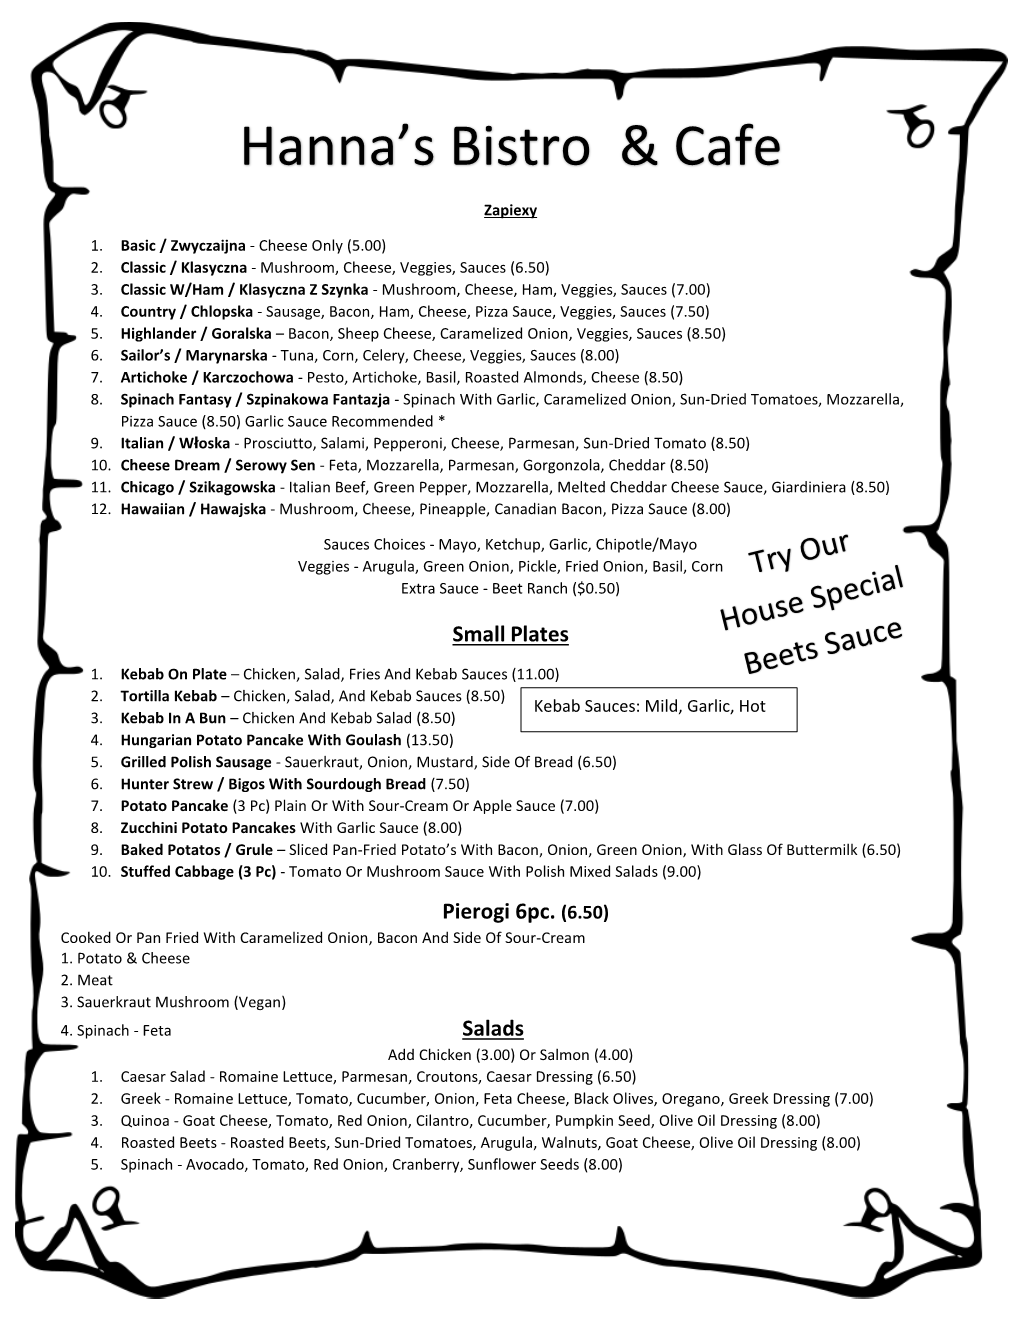 Hanna's Bistro & Cafe